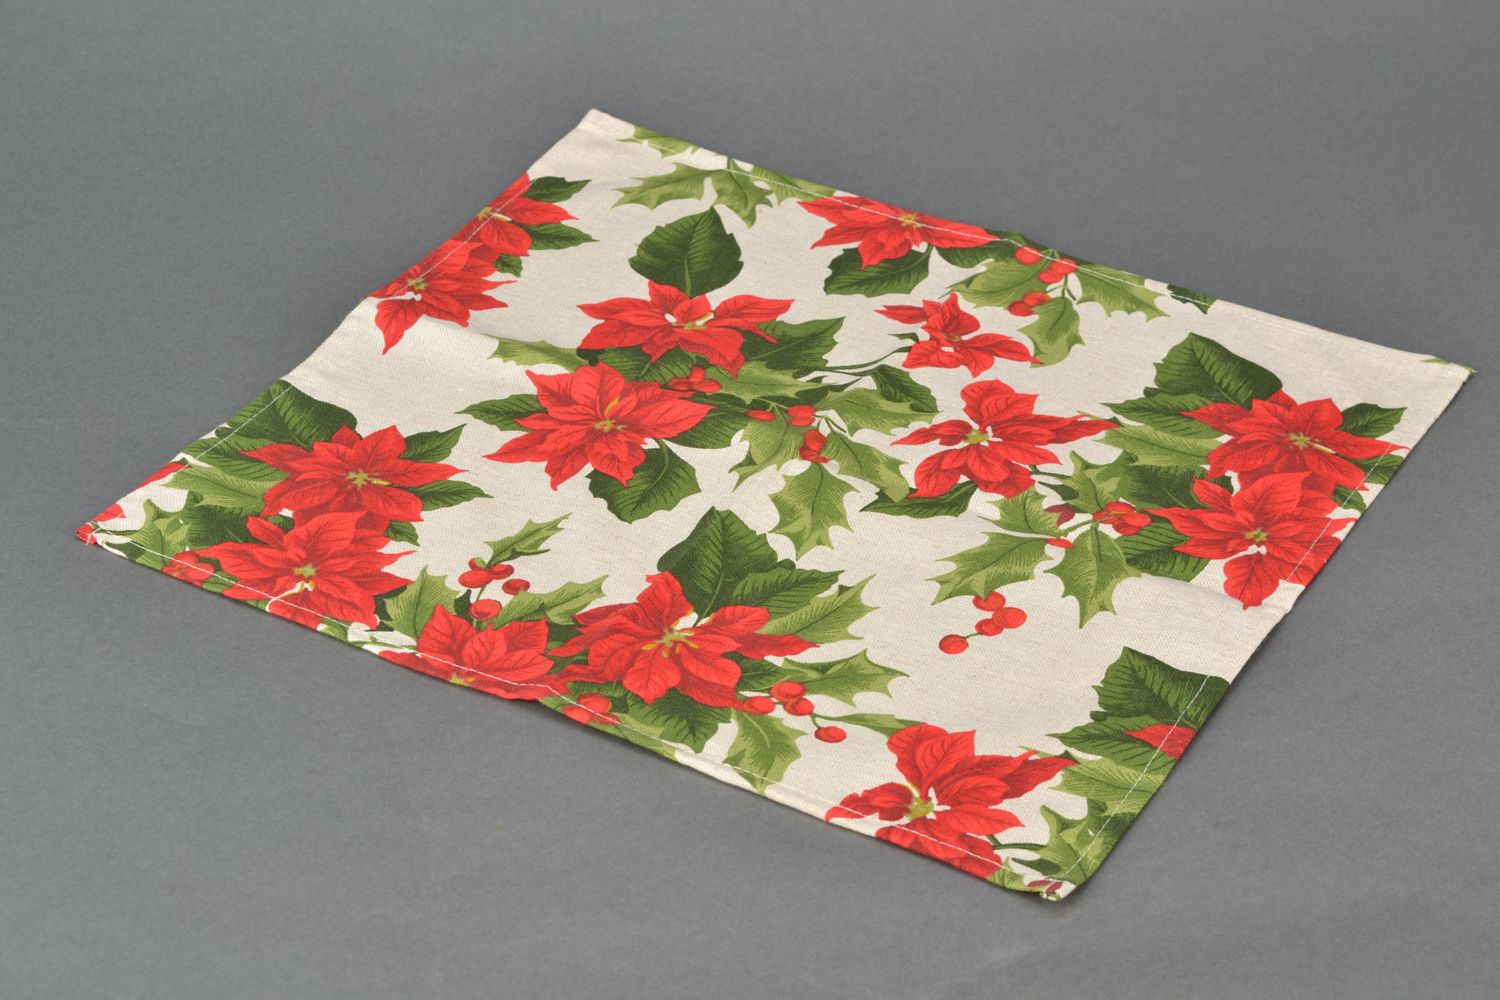 Decorative Christmas fabric napkin photo 4